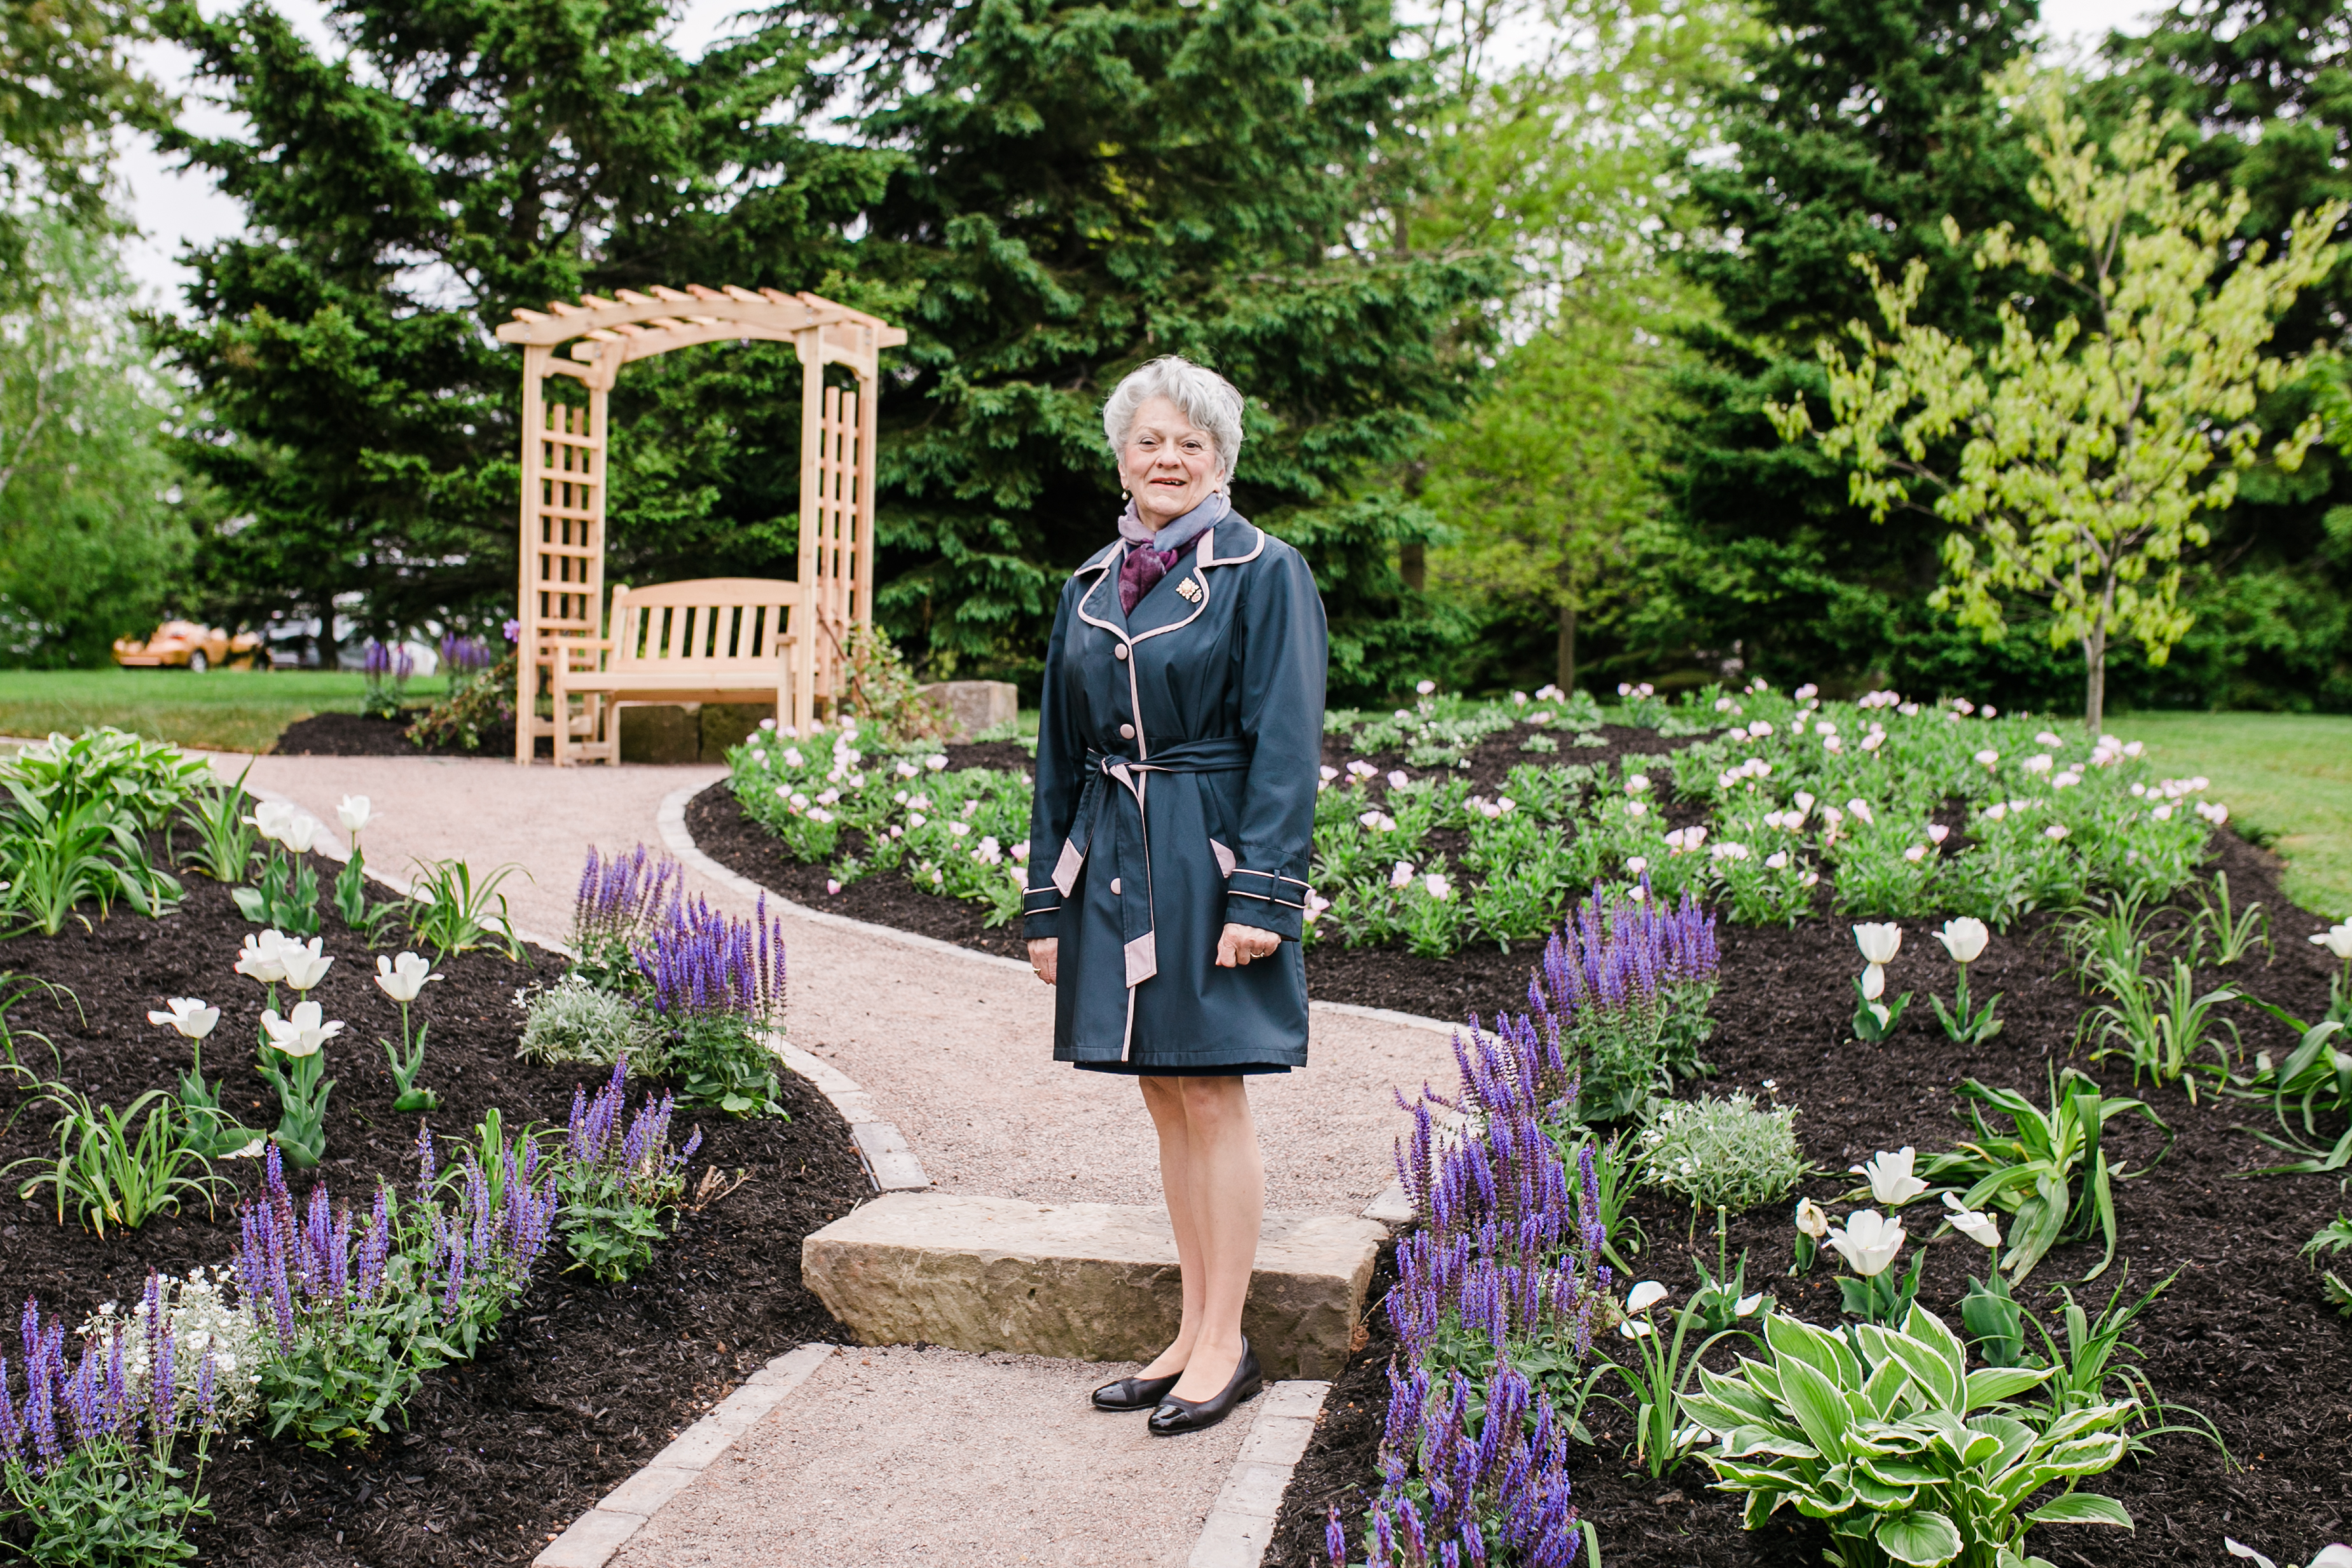 Her Honour unveiling the Jubilee Garden